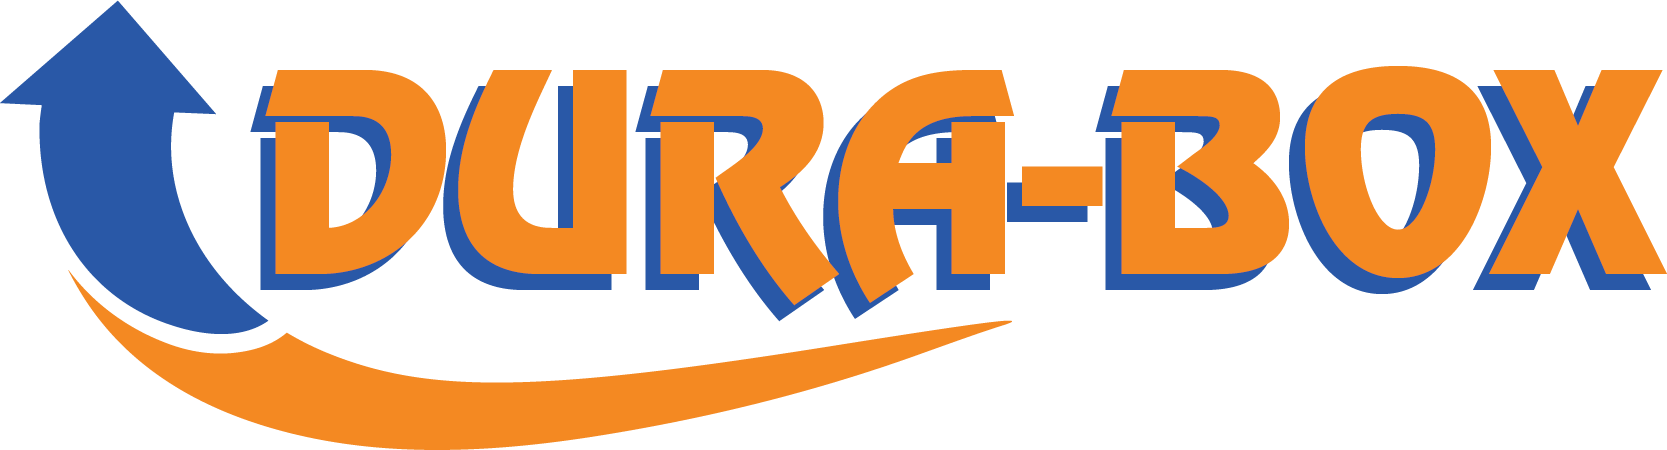 Dura-box logo in orange and blue